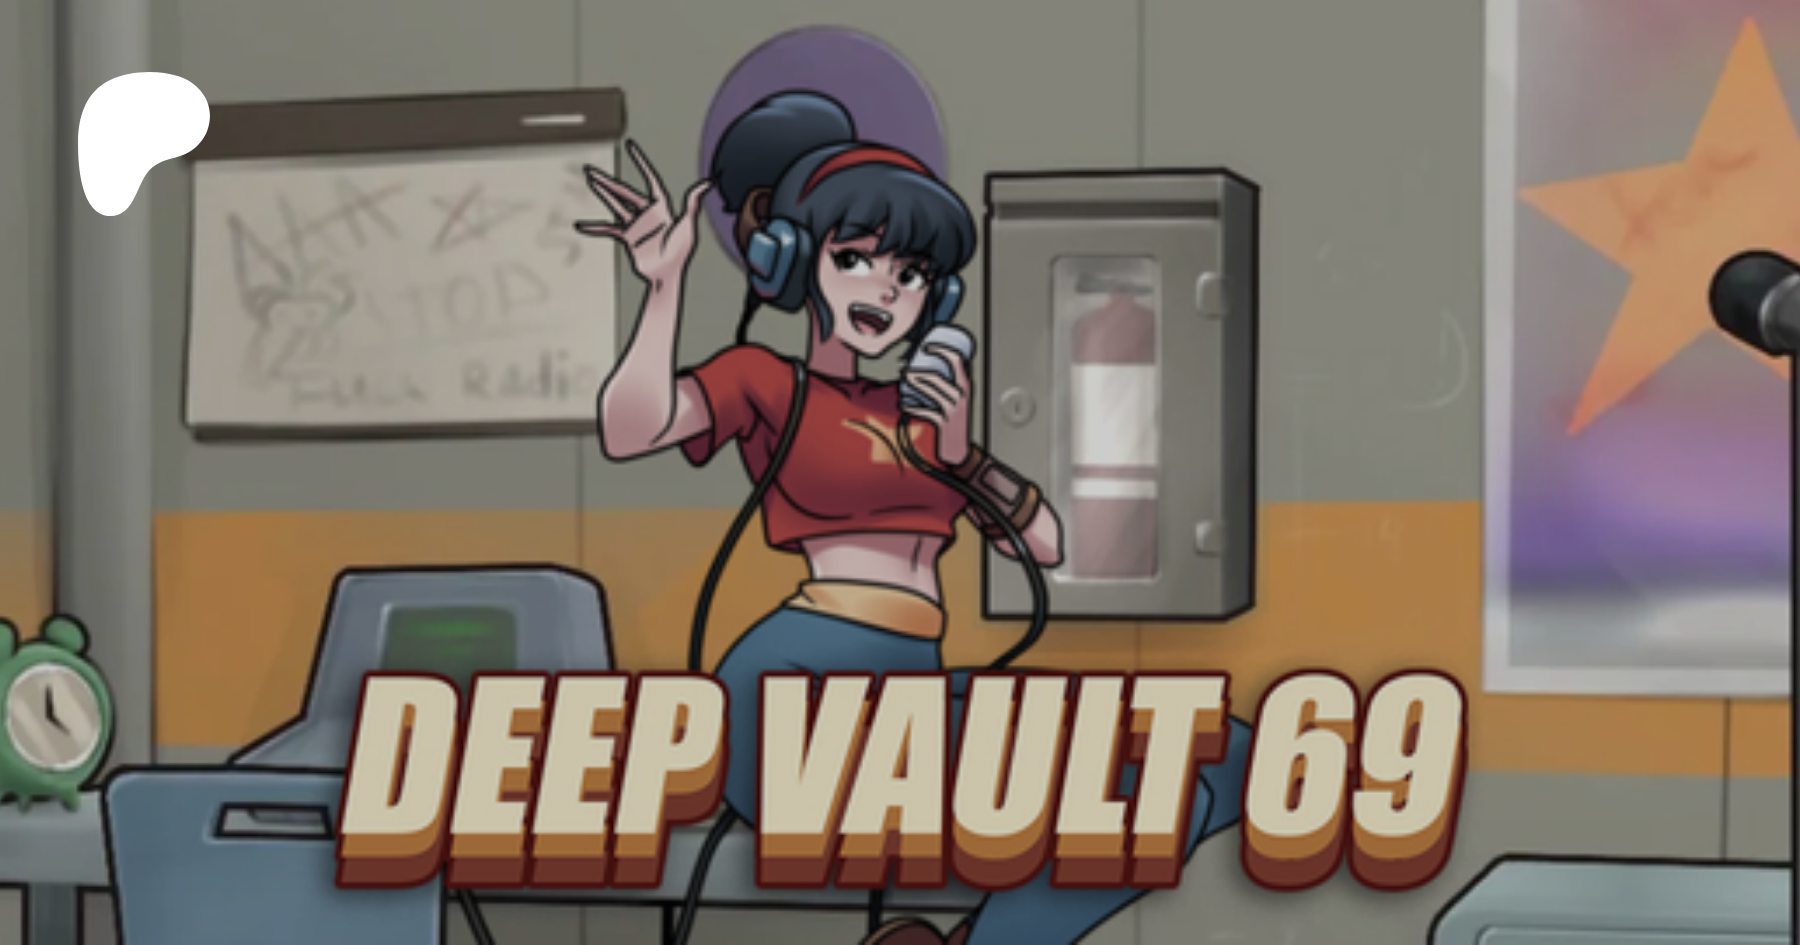 Deep vault 69 code